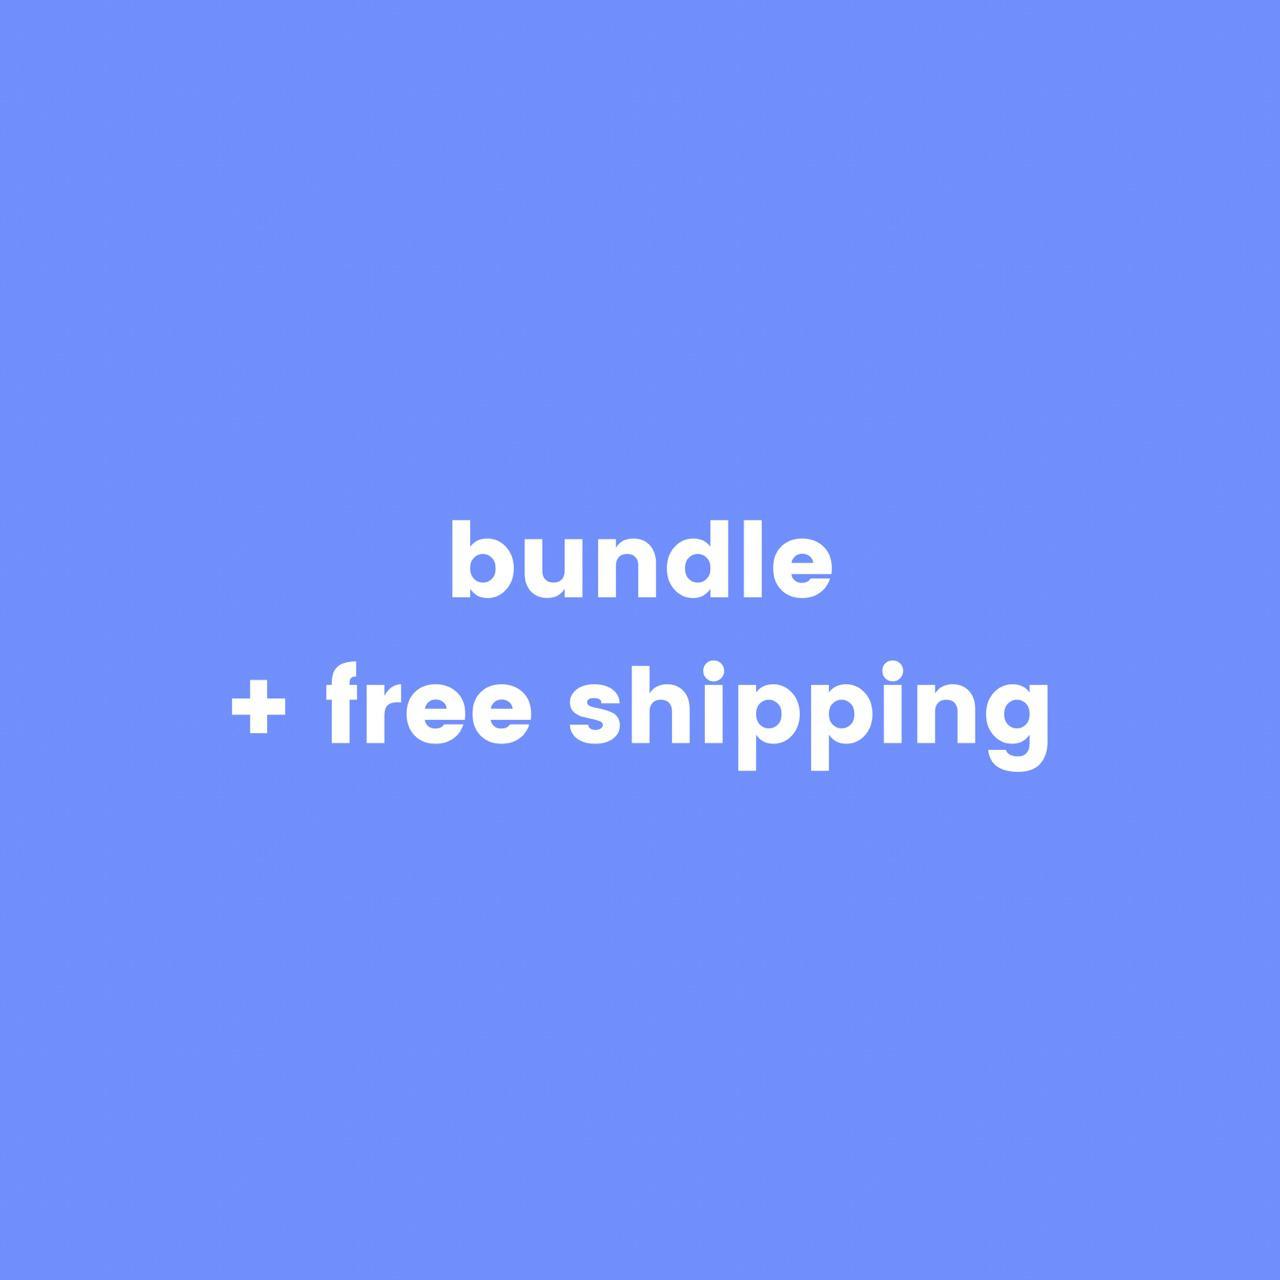 Product Image 1 - bundle!
*bebe skirt
*aritzia shirt

shipping asap💌💌💌